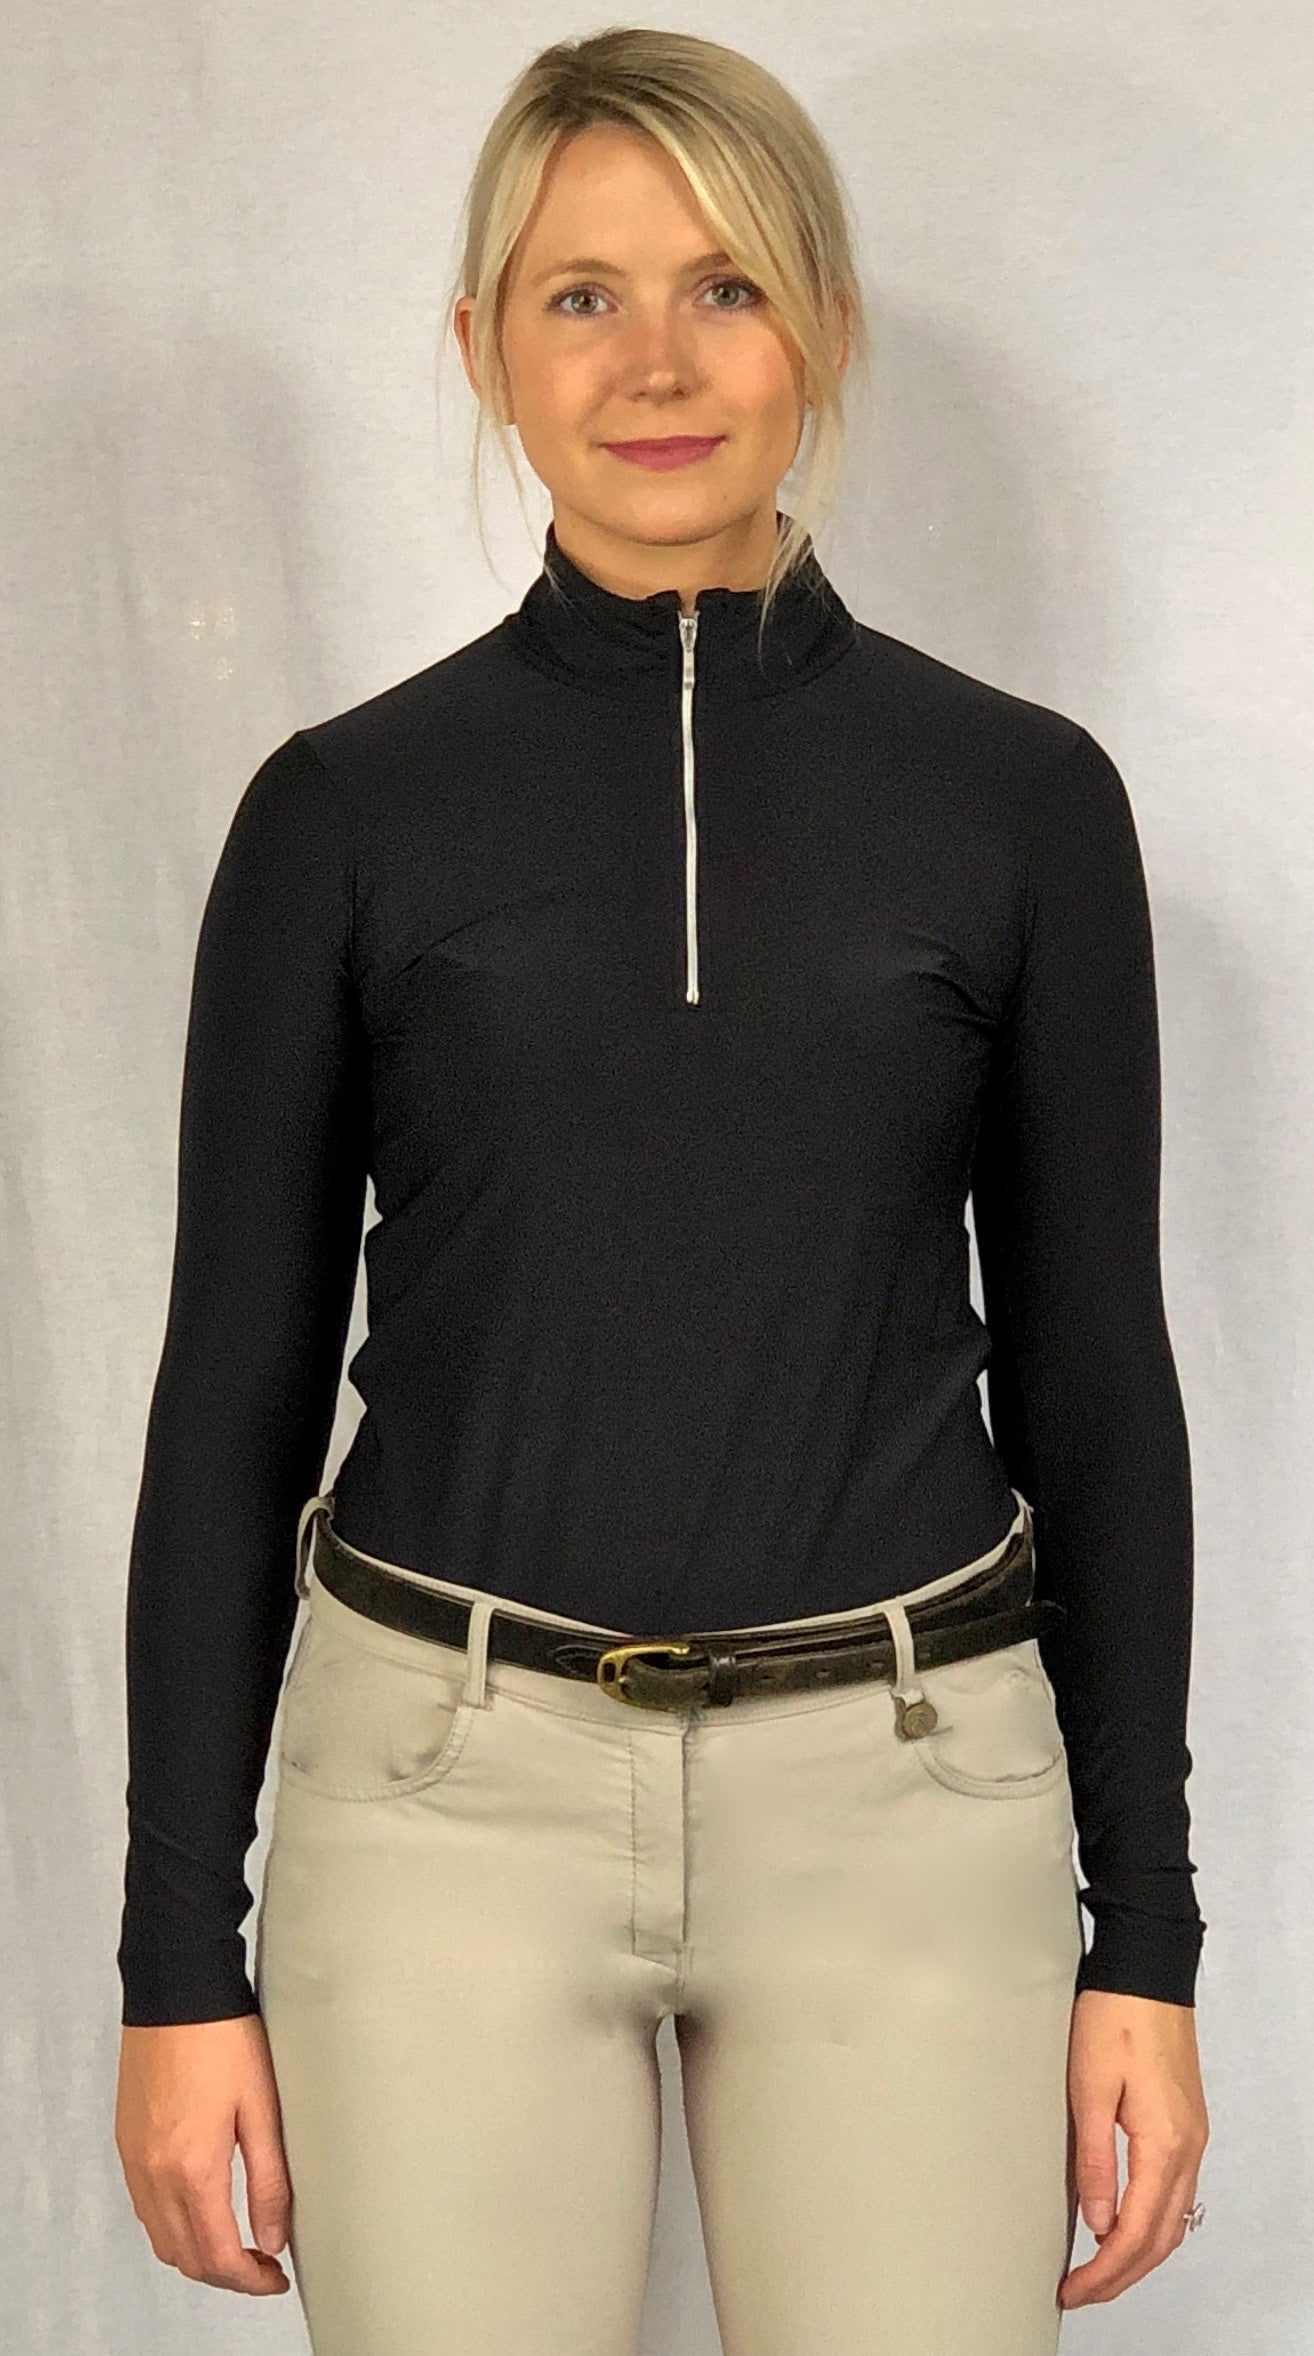 70° Performance Sun Shirt In Black- SALE PRICE